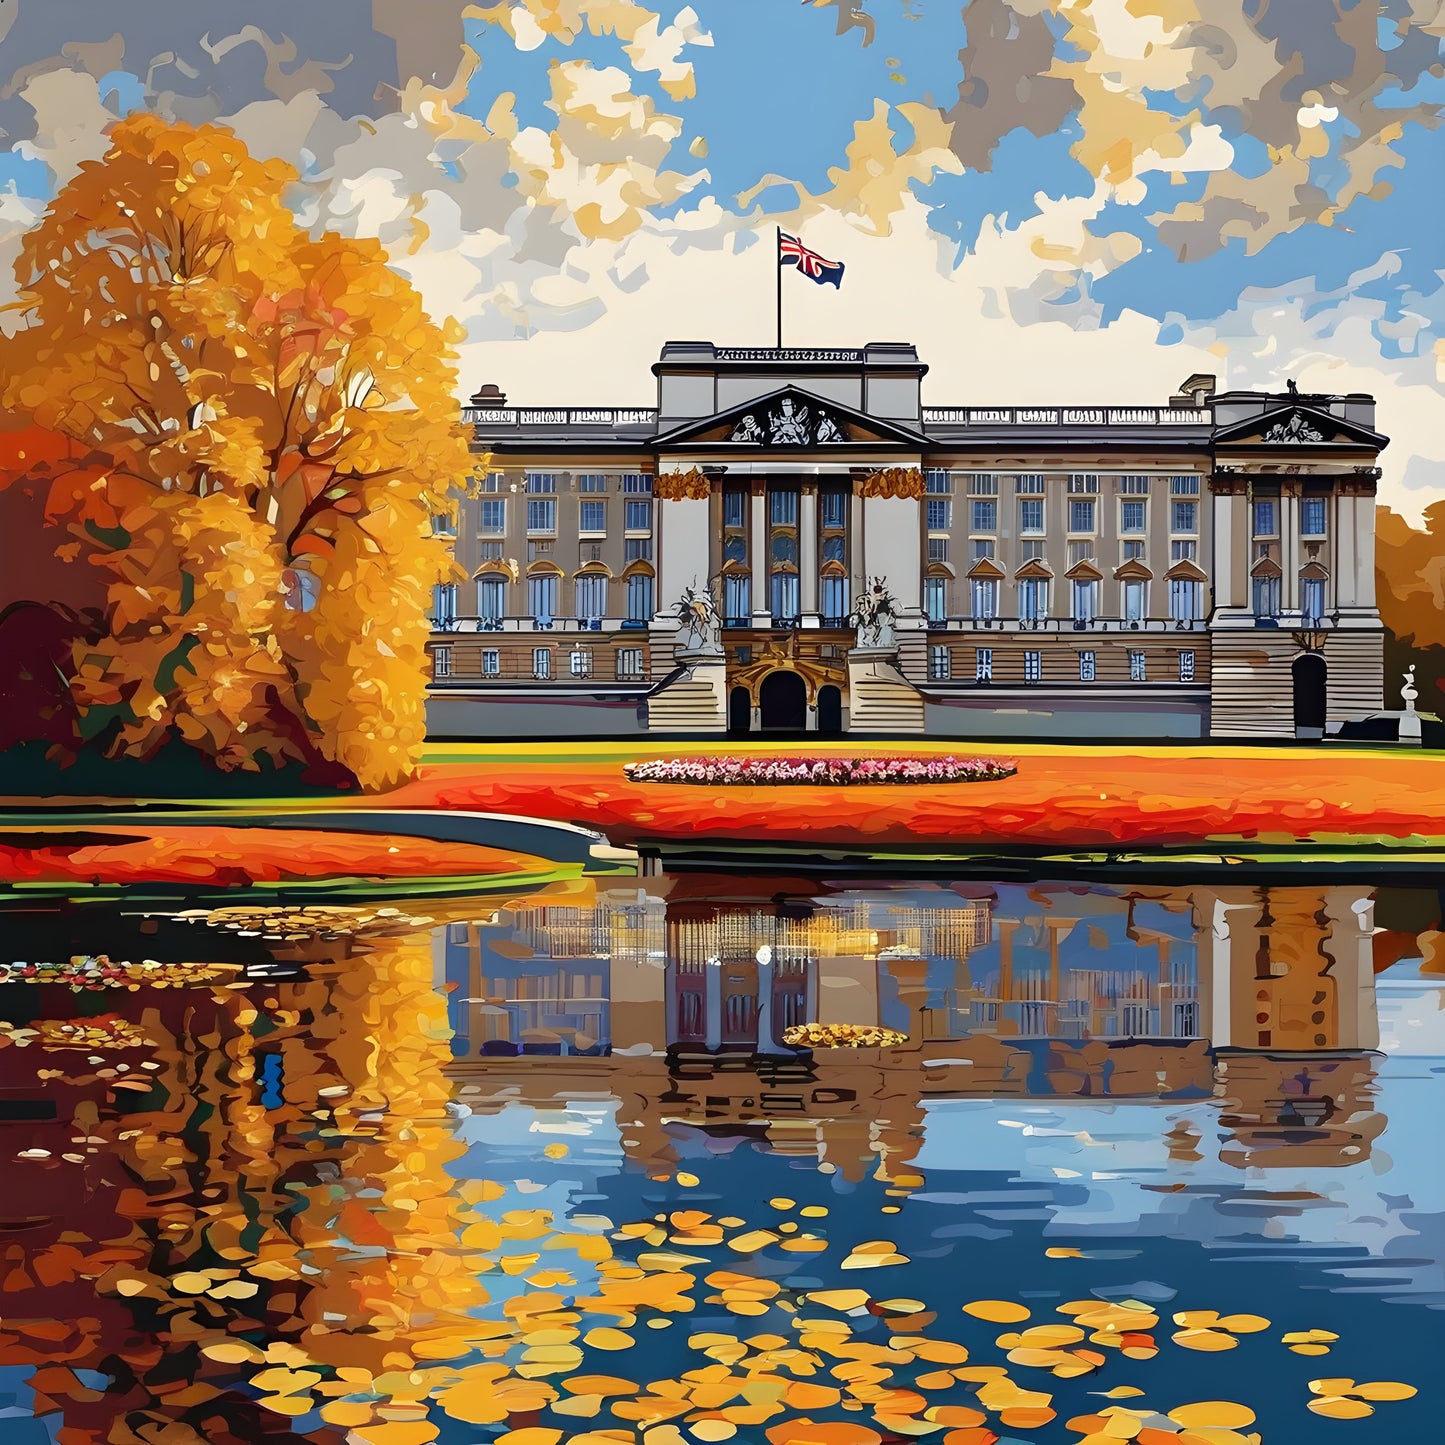 Buckingham Palace, London (4) PD - Van-Go Paint-By-Number Kit